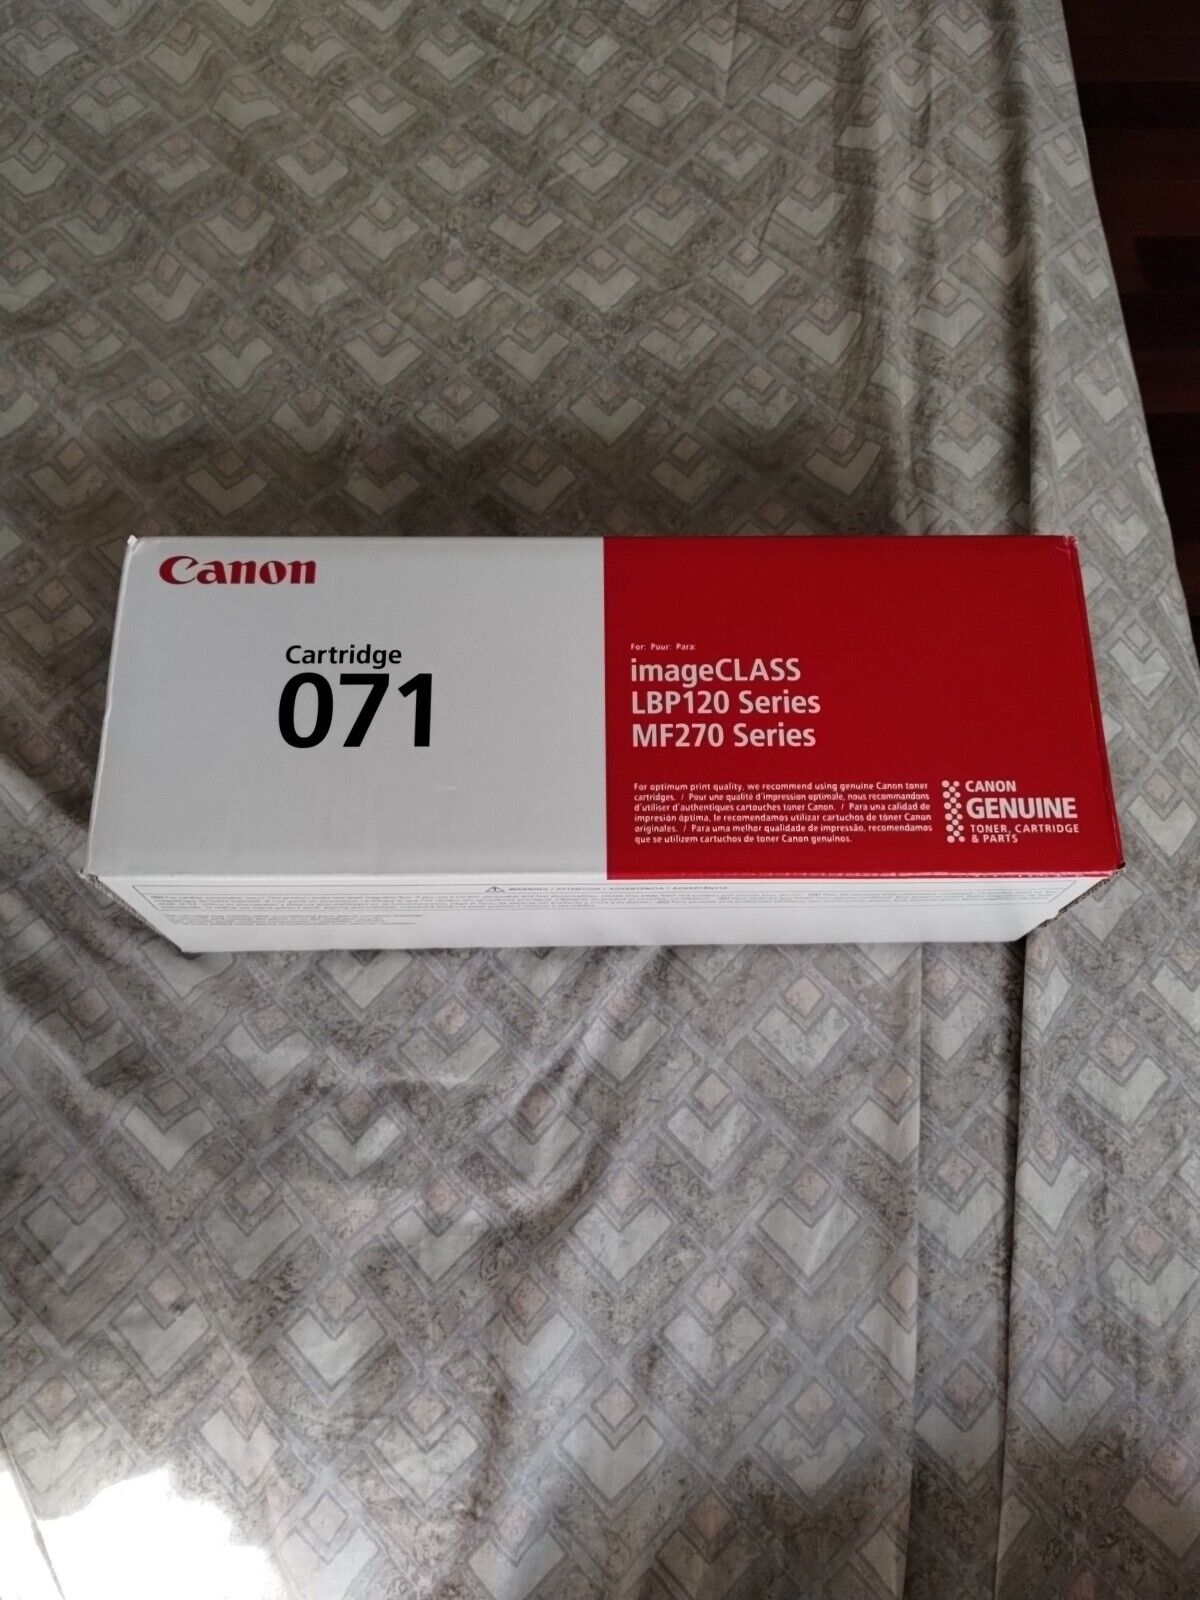 NEW Genuine Canon 071 Original Standard Yield Laser Toner Cartridge OEM - Black